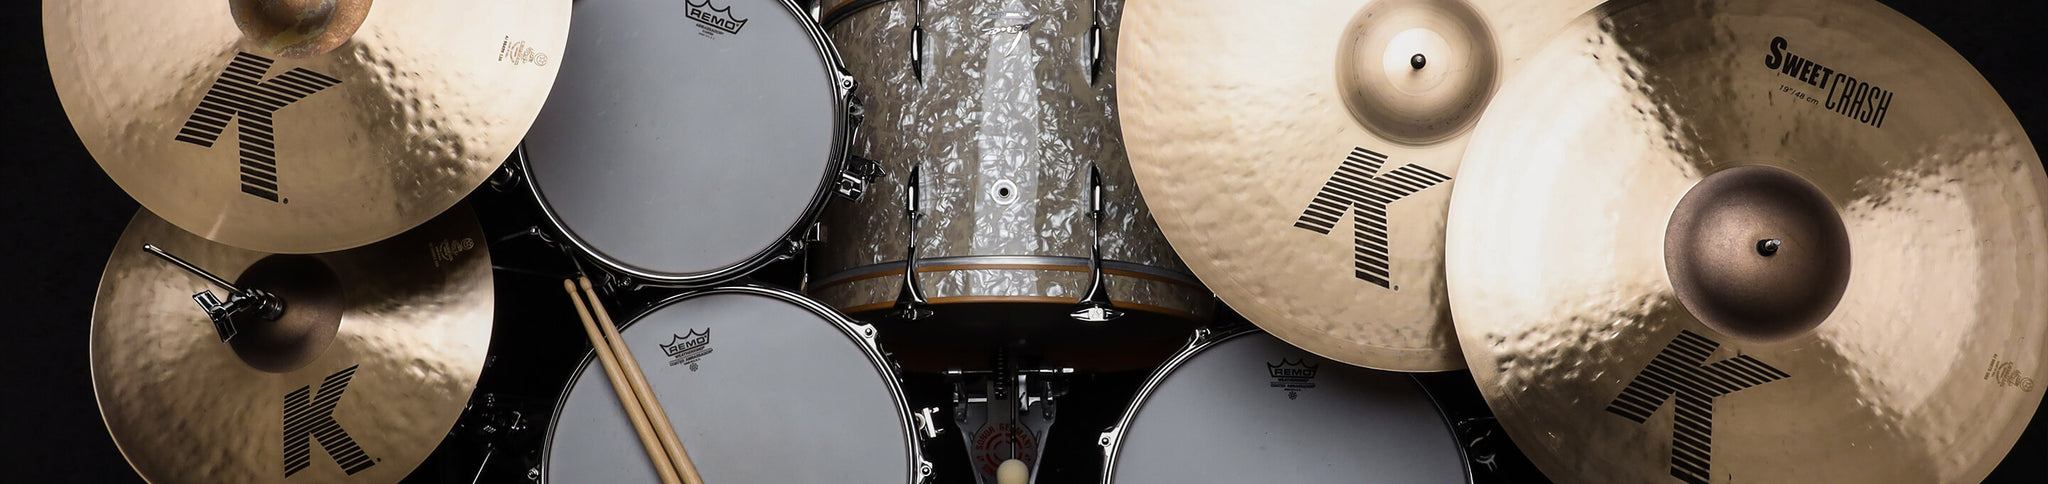 Cymbal Packs - Drum Set